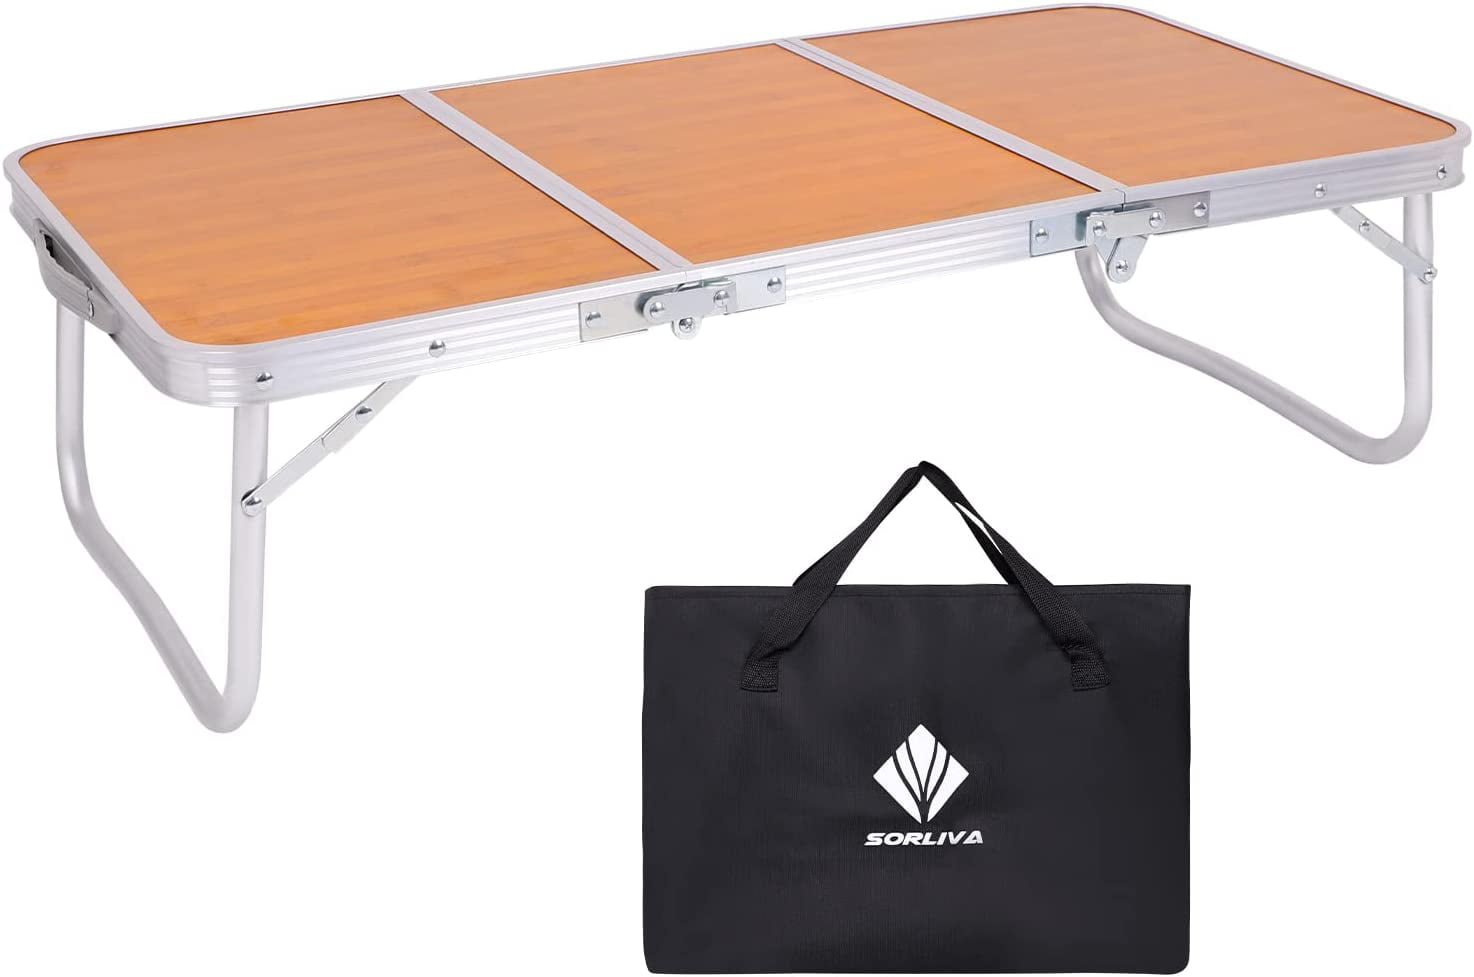 Yodudm Folding Camping Table, Portable Picnic Camping Table Bed Table ...